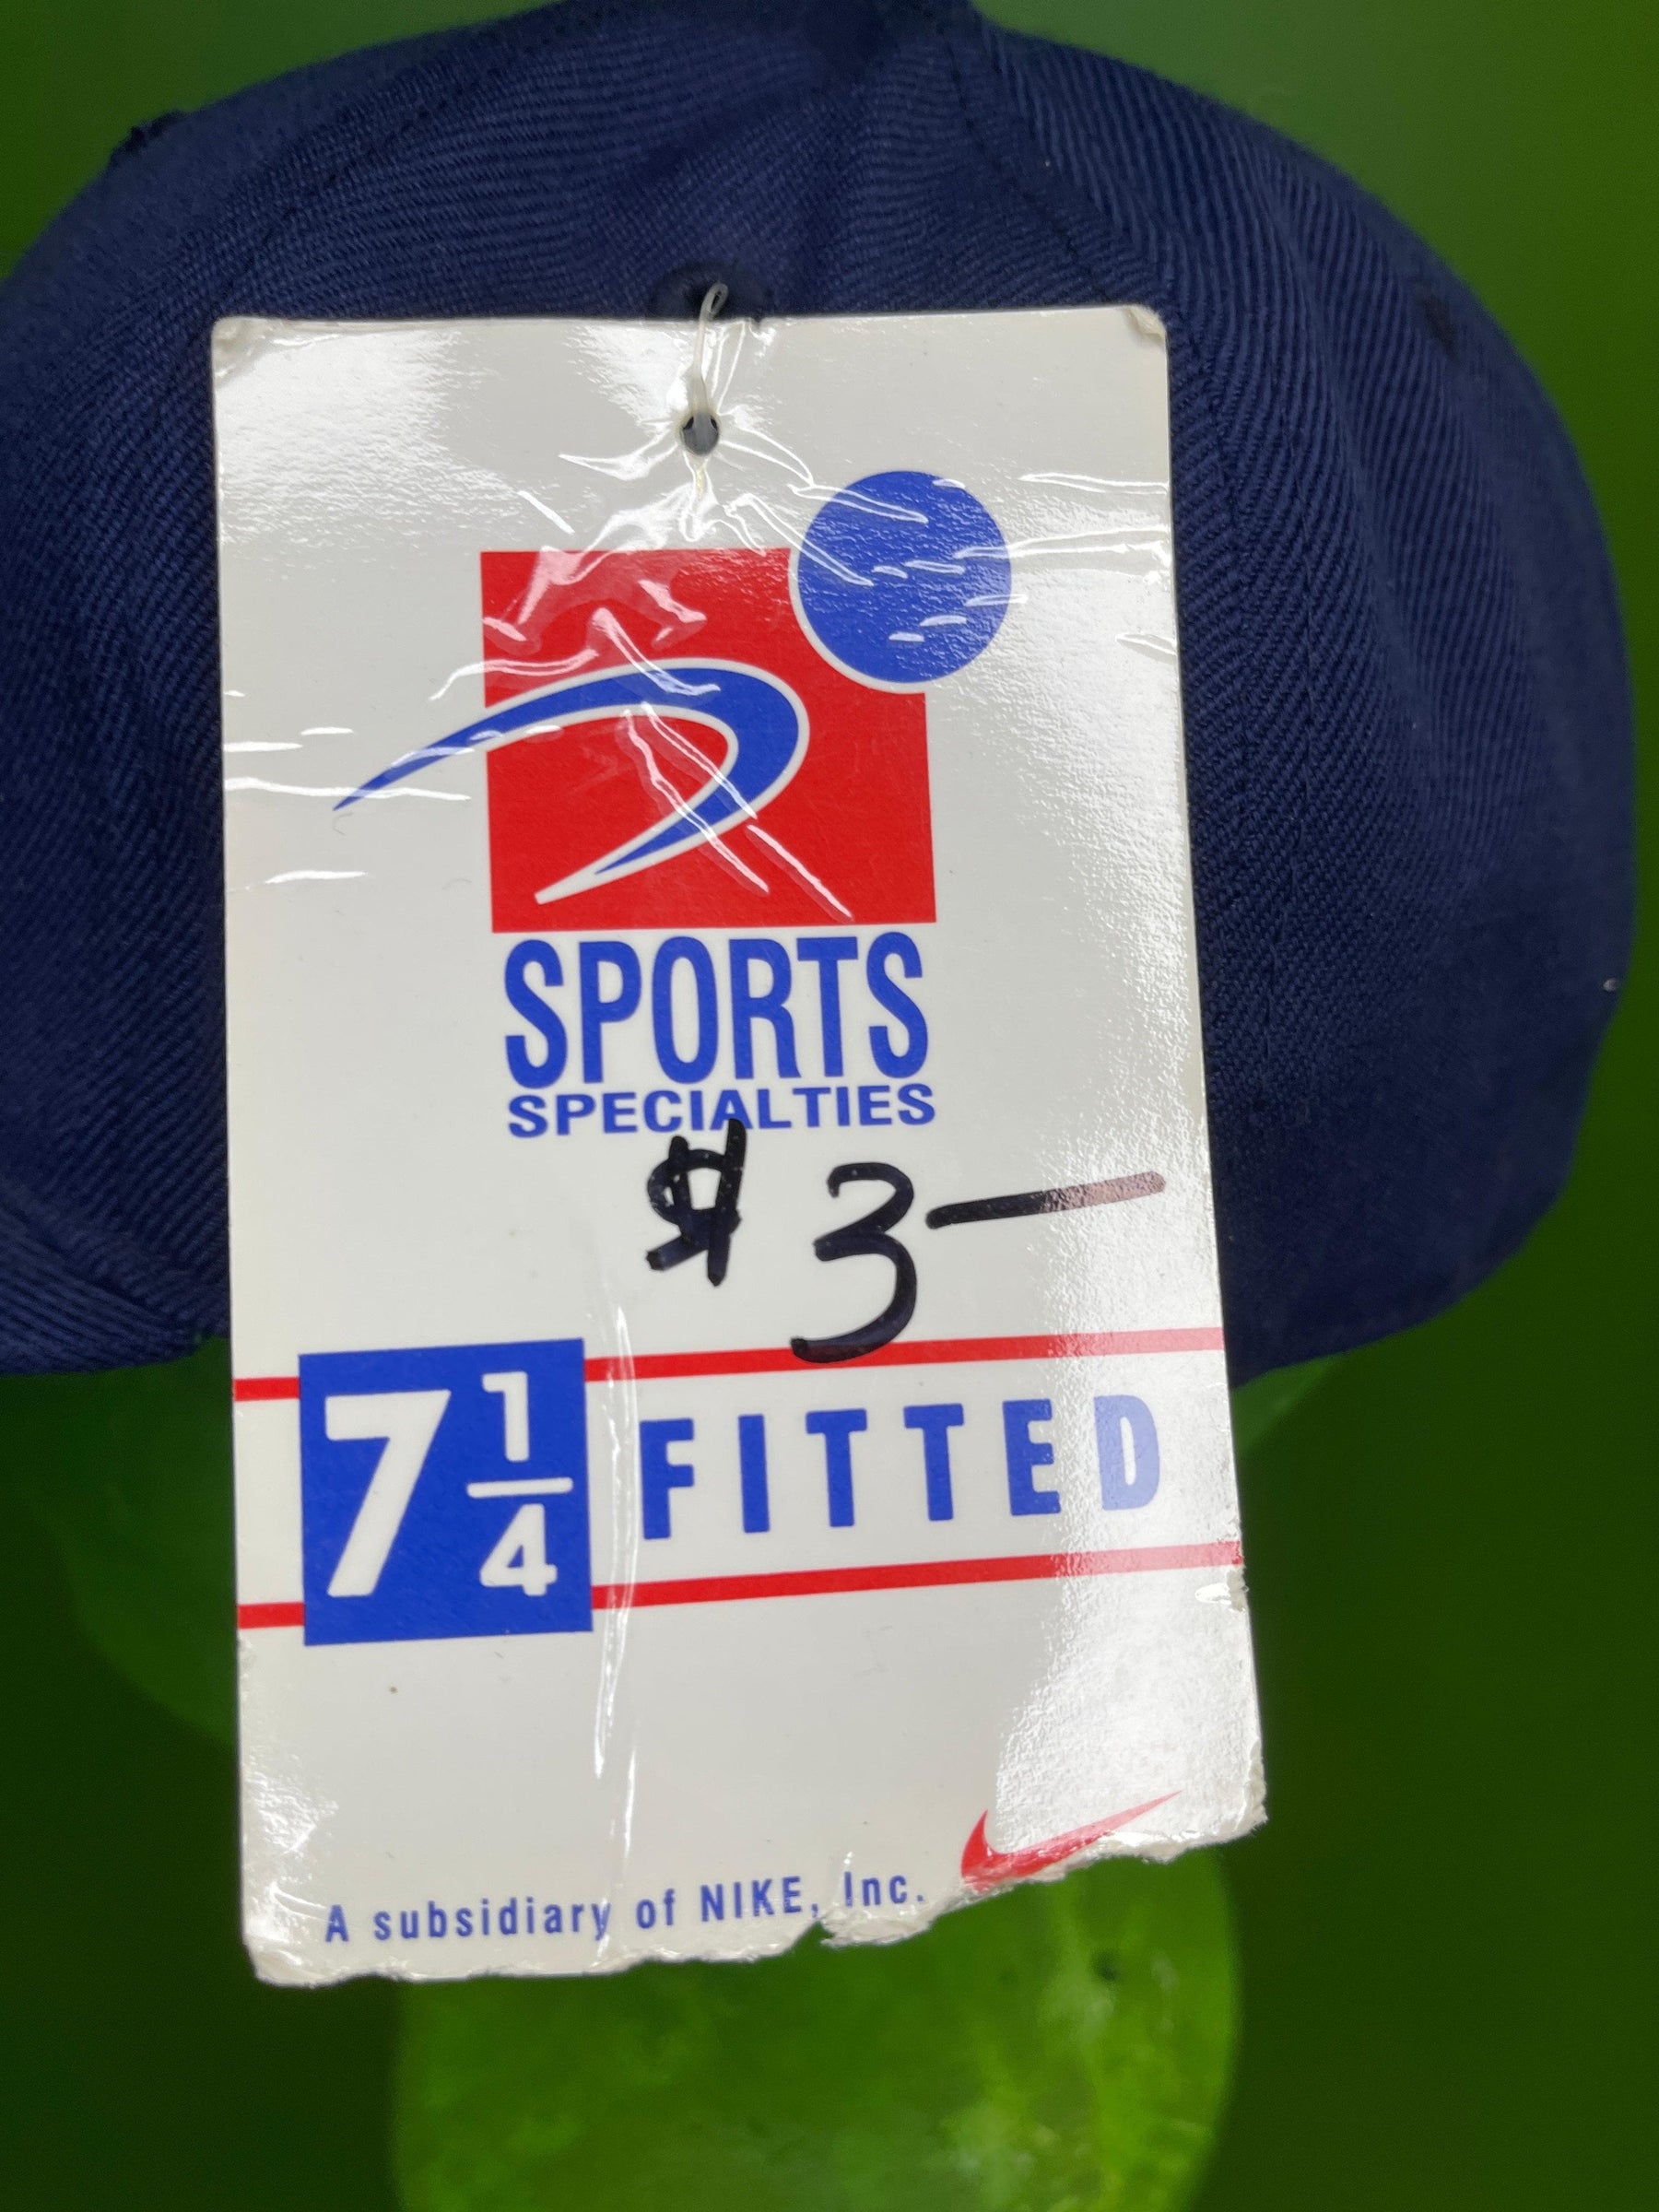 NCAA Kansas Jayhawks Wool Blend Baseball Cap Hat Fitted Size 7-1/4 NWT